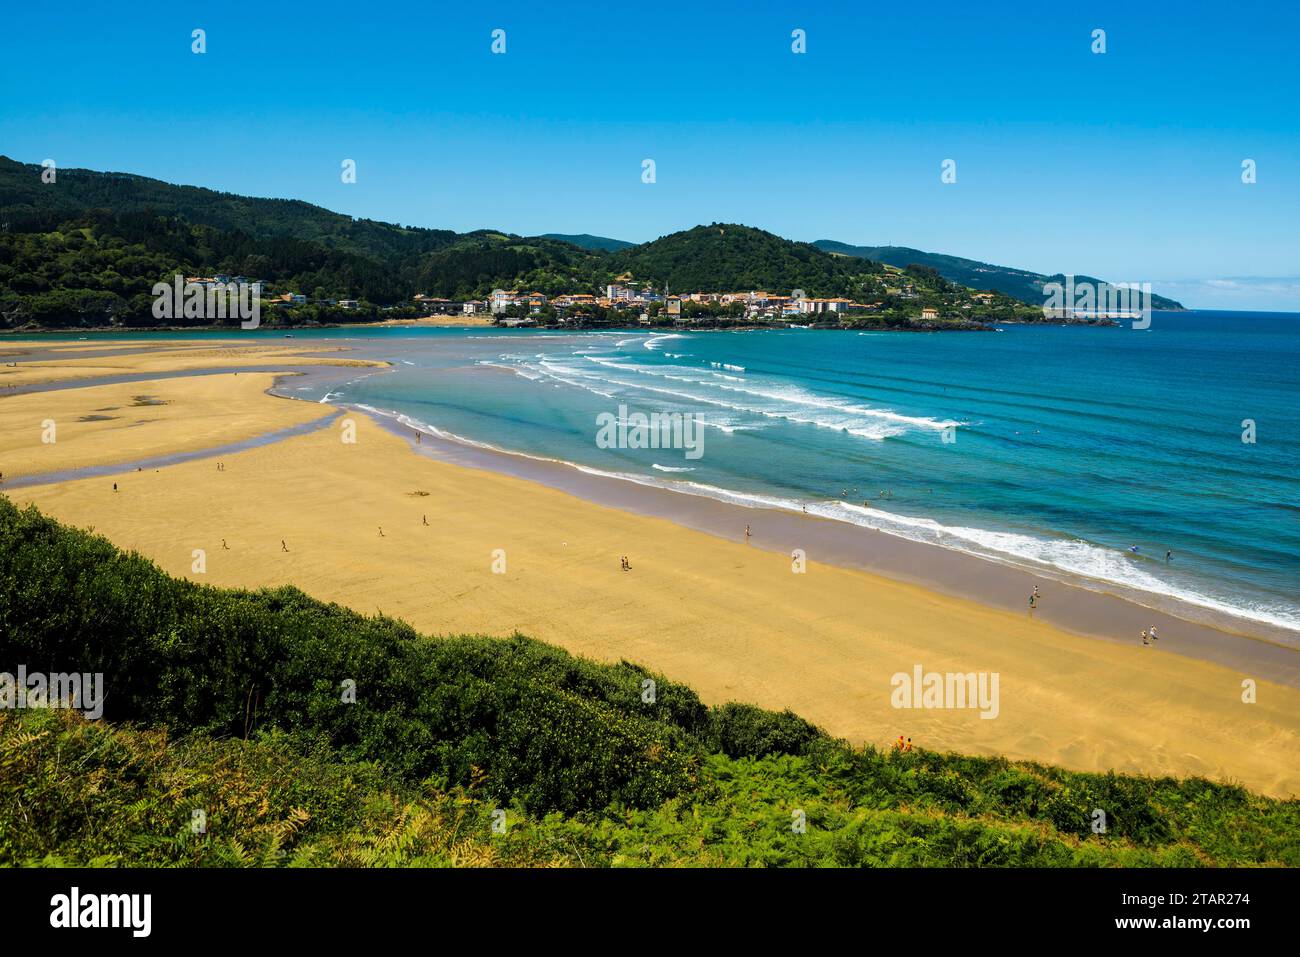 Beach and coast, Playa de Laida, Mundaka, Urdaibai Biosphere Reserve, near Bilbao, Province of Bizkaia, Basque Country, Northern Spain, Spain Stock Photo